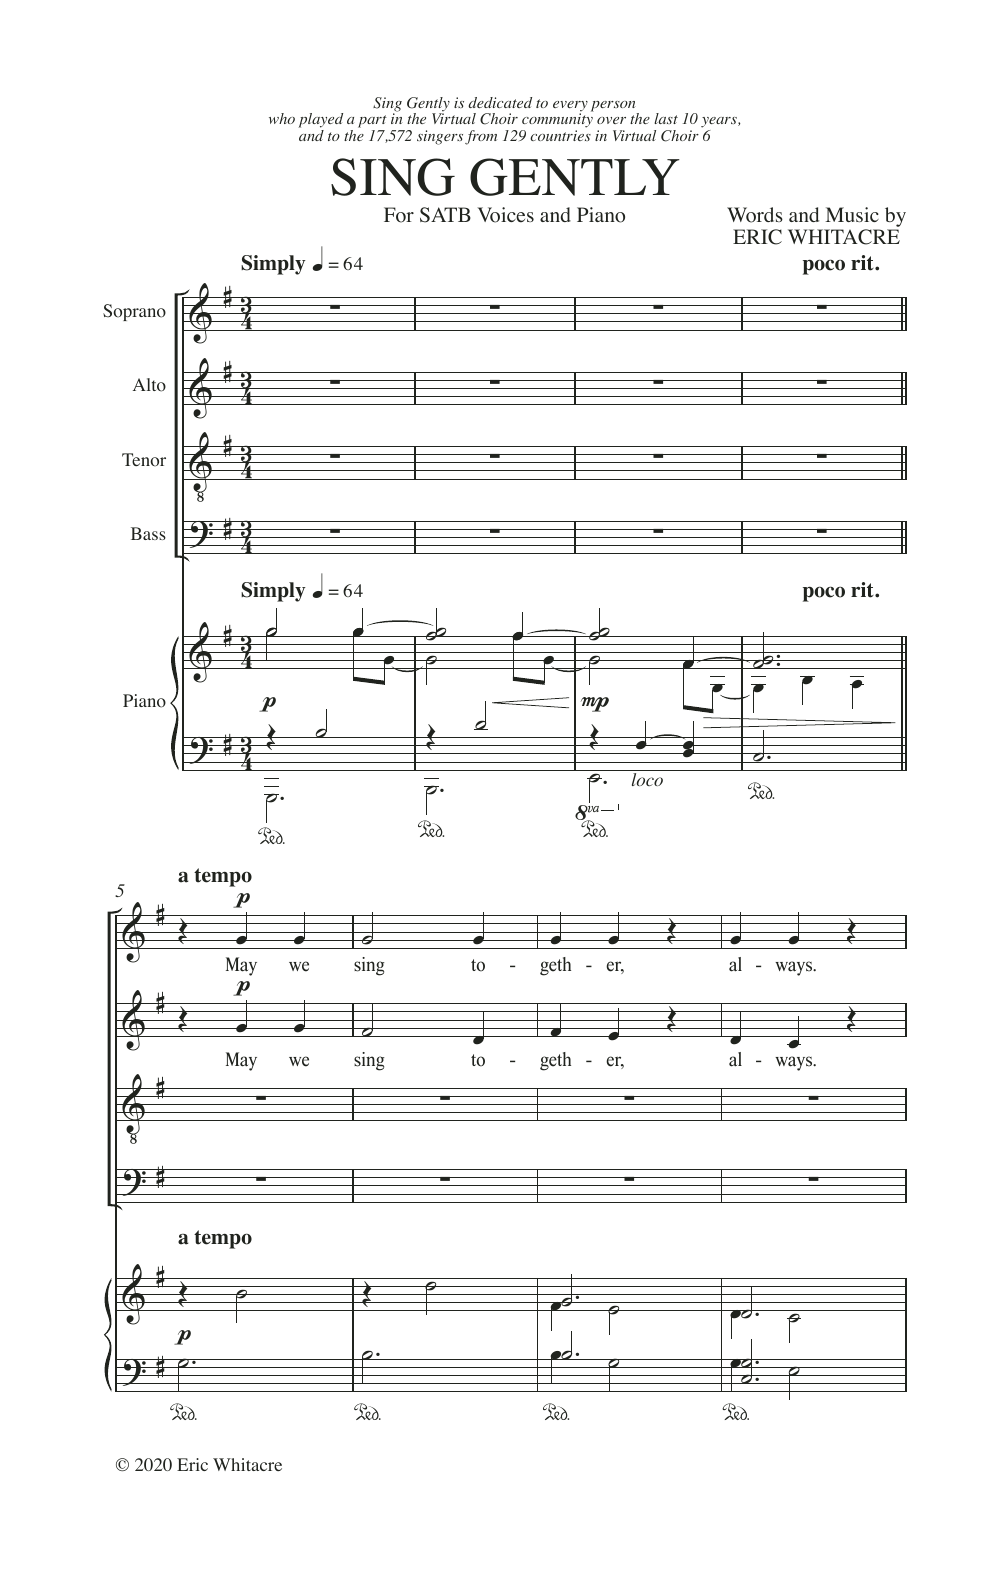 Download Eric Whitacre Sing Gently Sheet Music